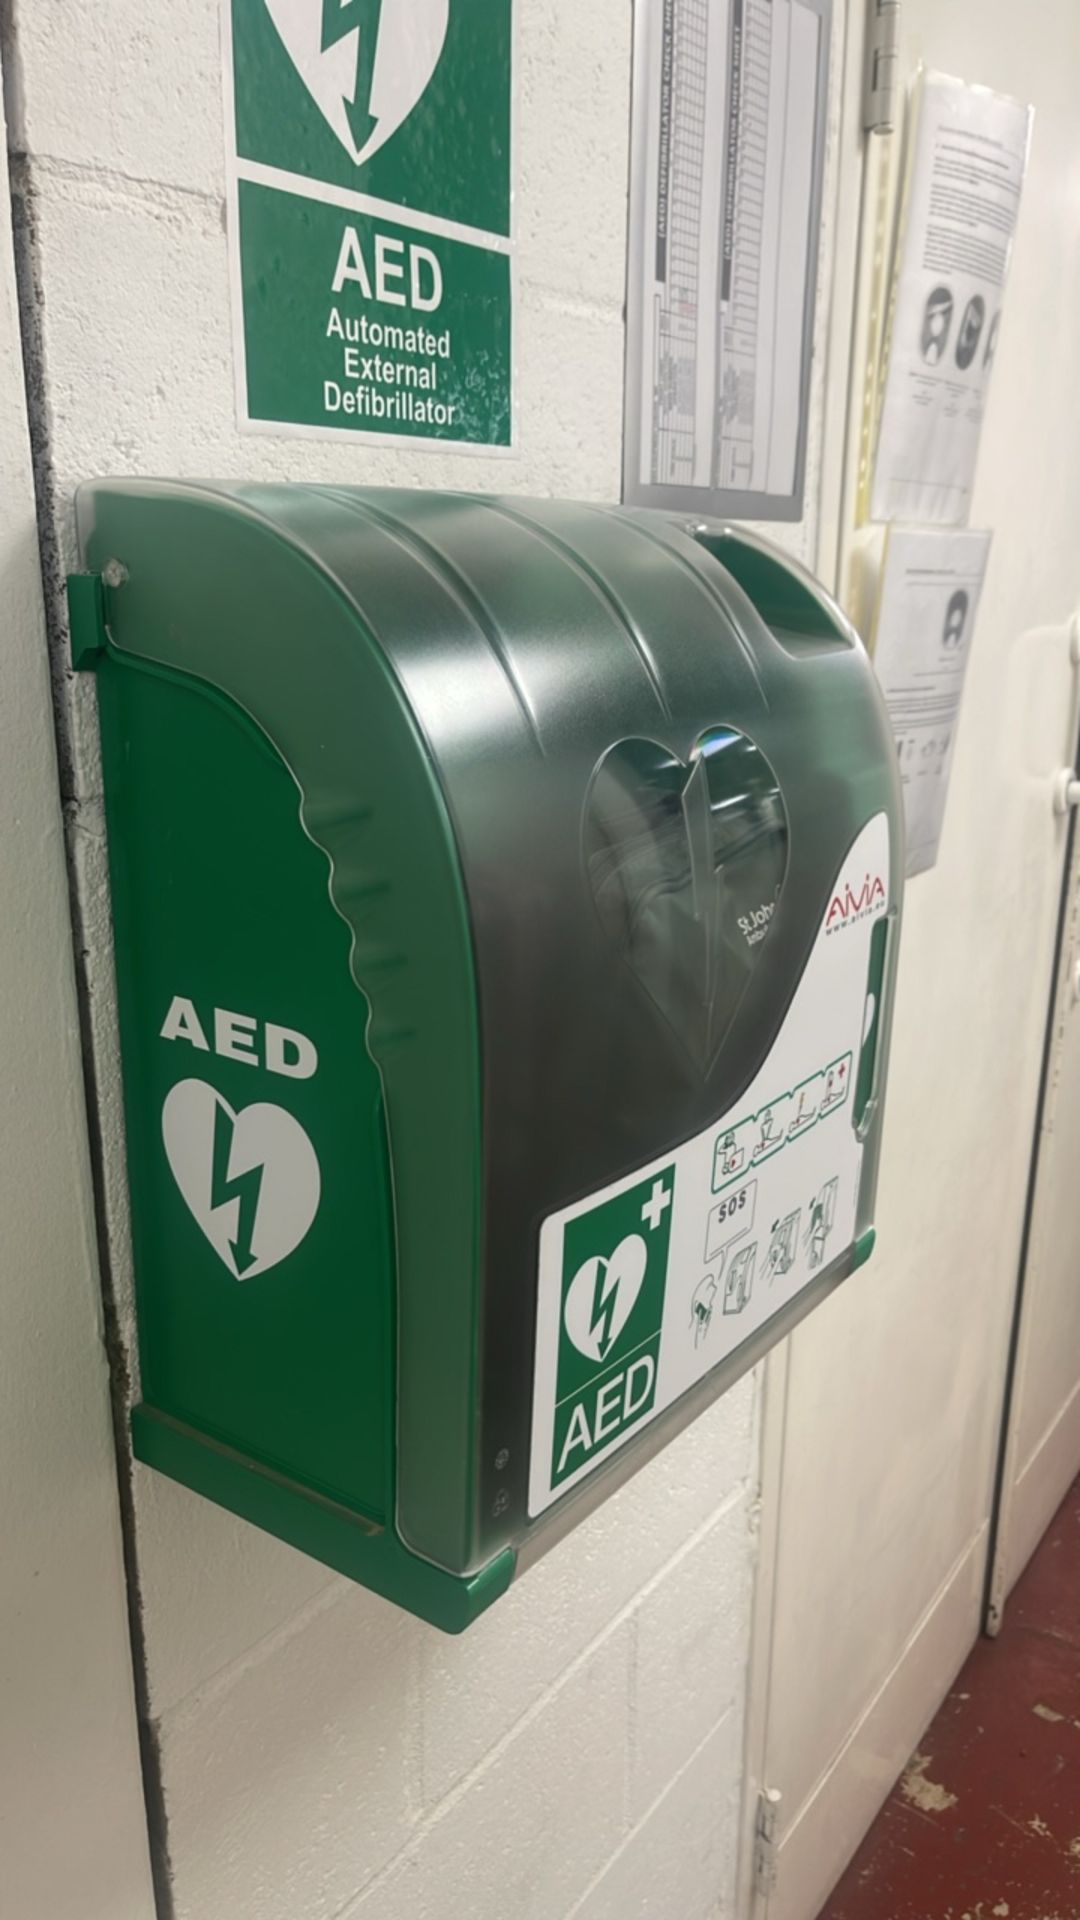 Defibrillator - Image 3 of 6